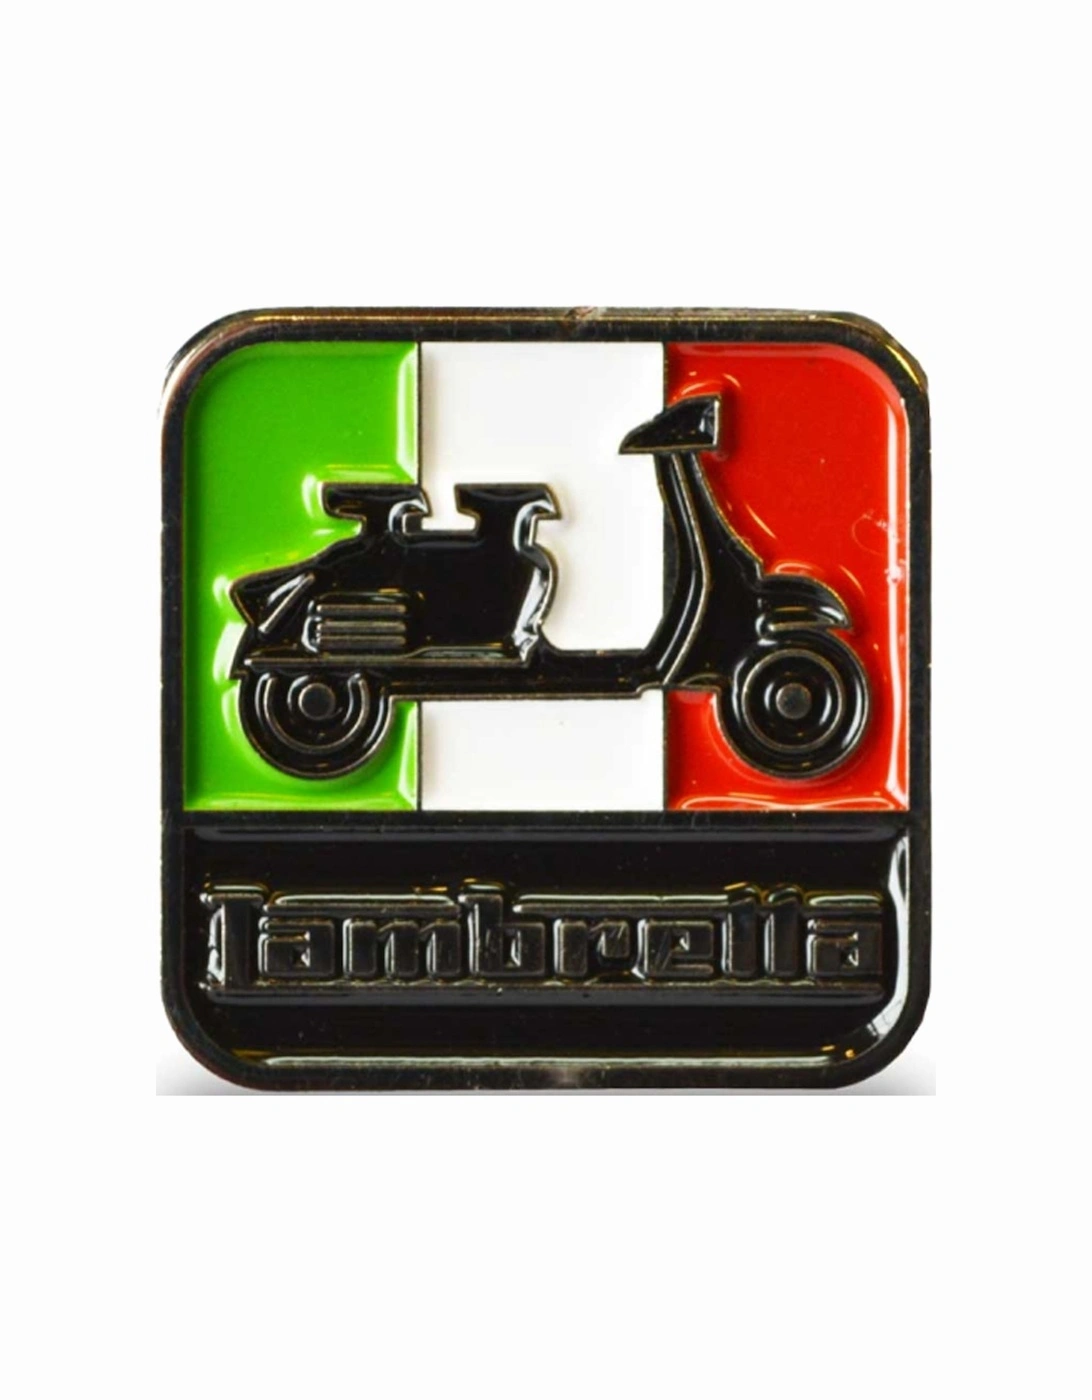 Enamel Retro Collectable Pin Badge